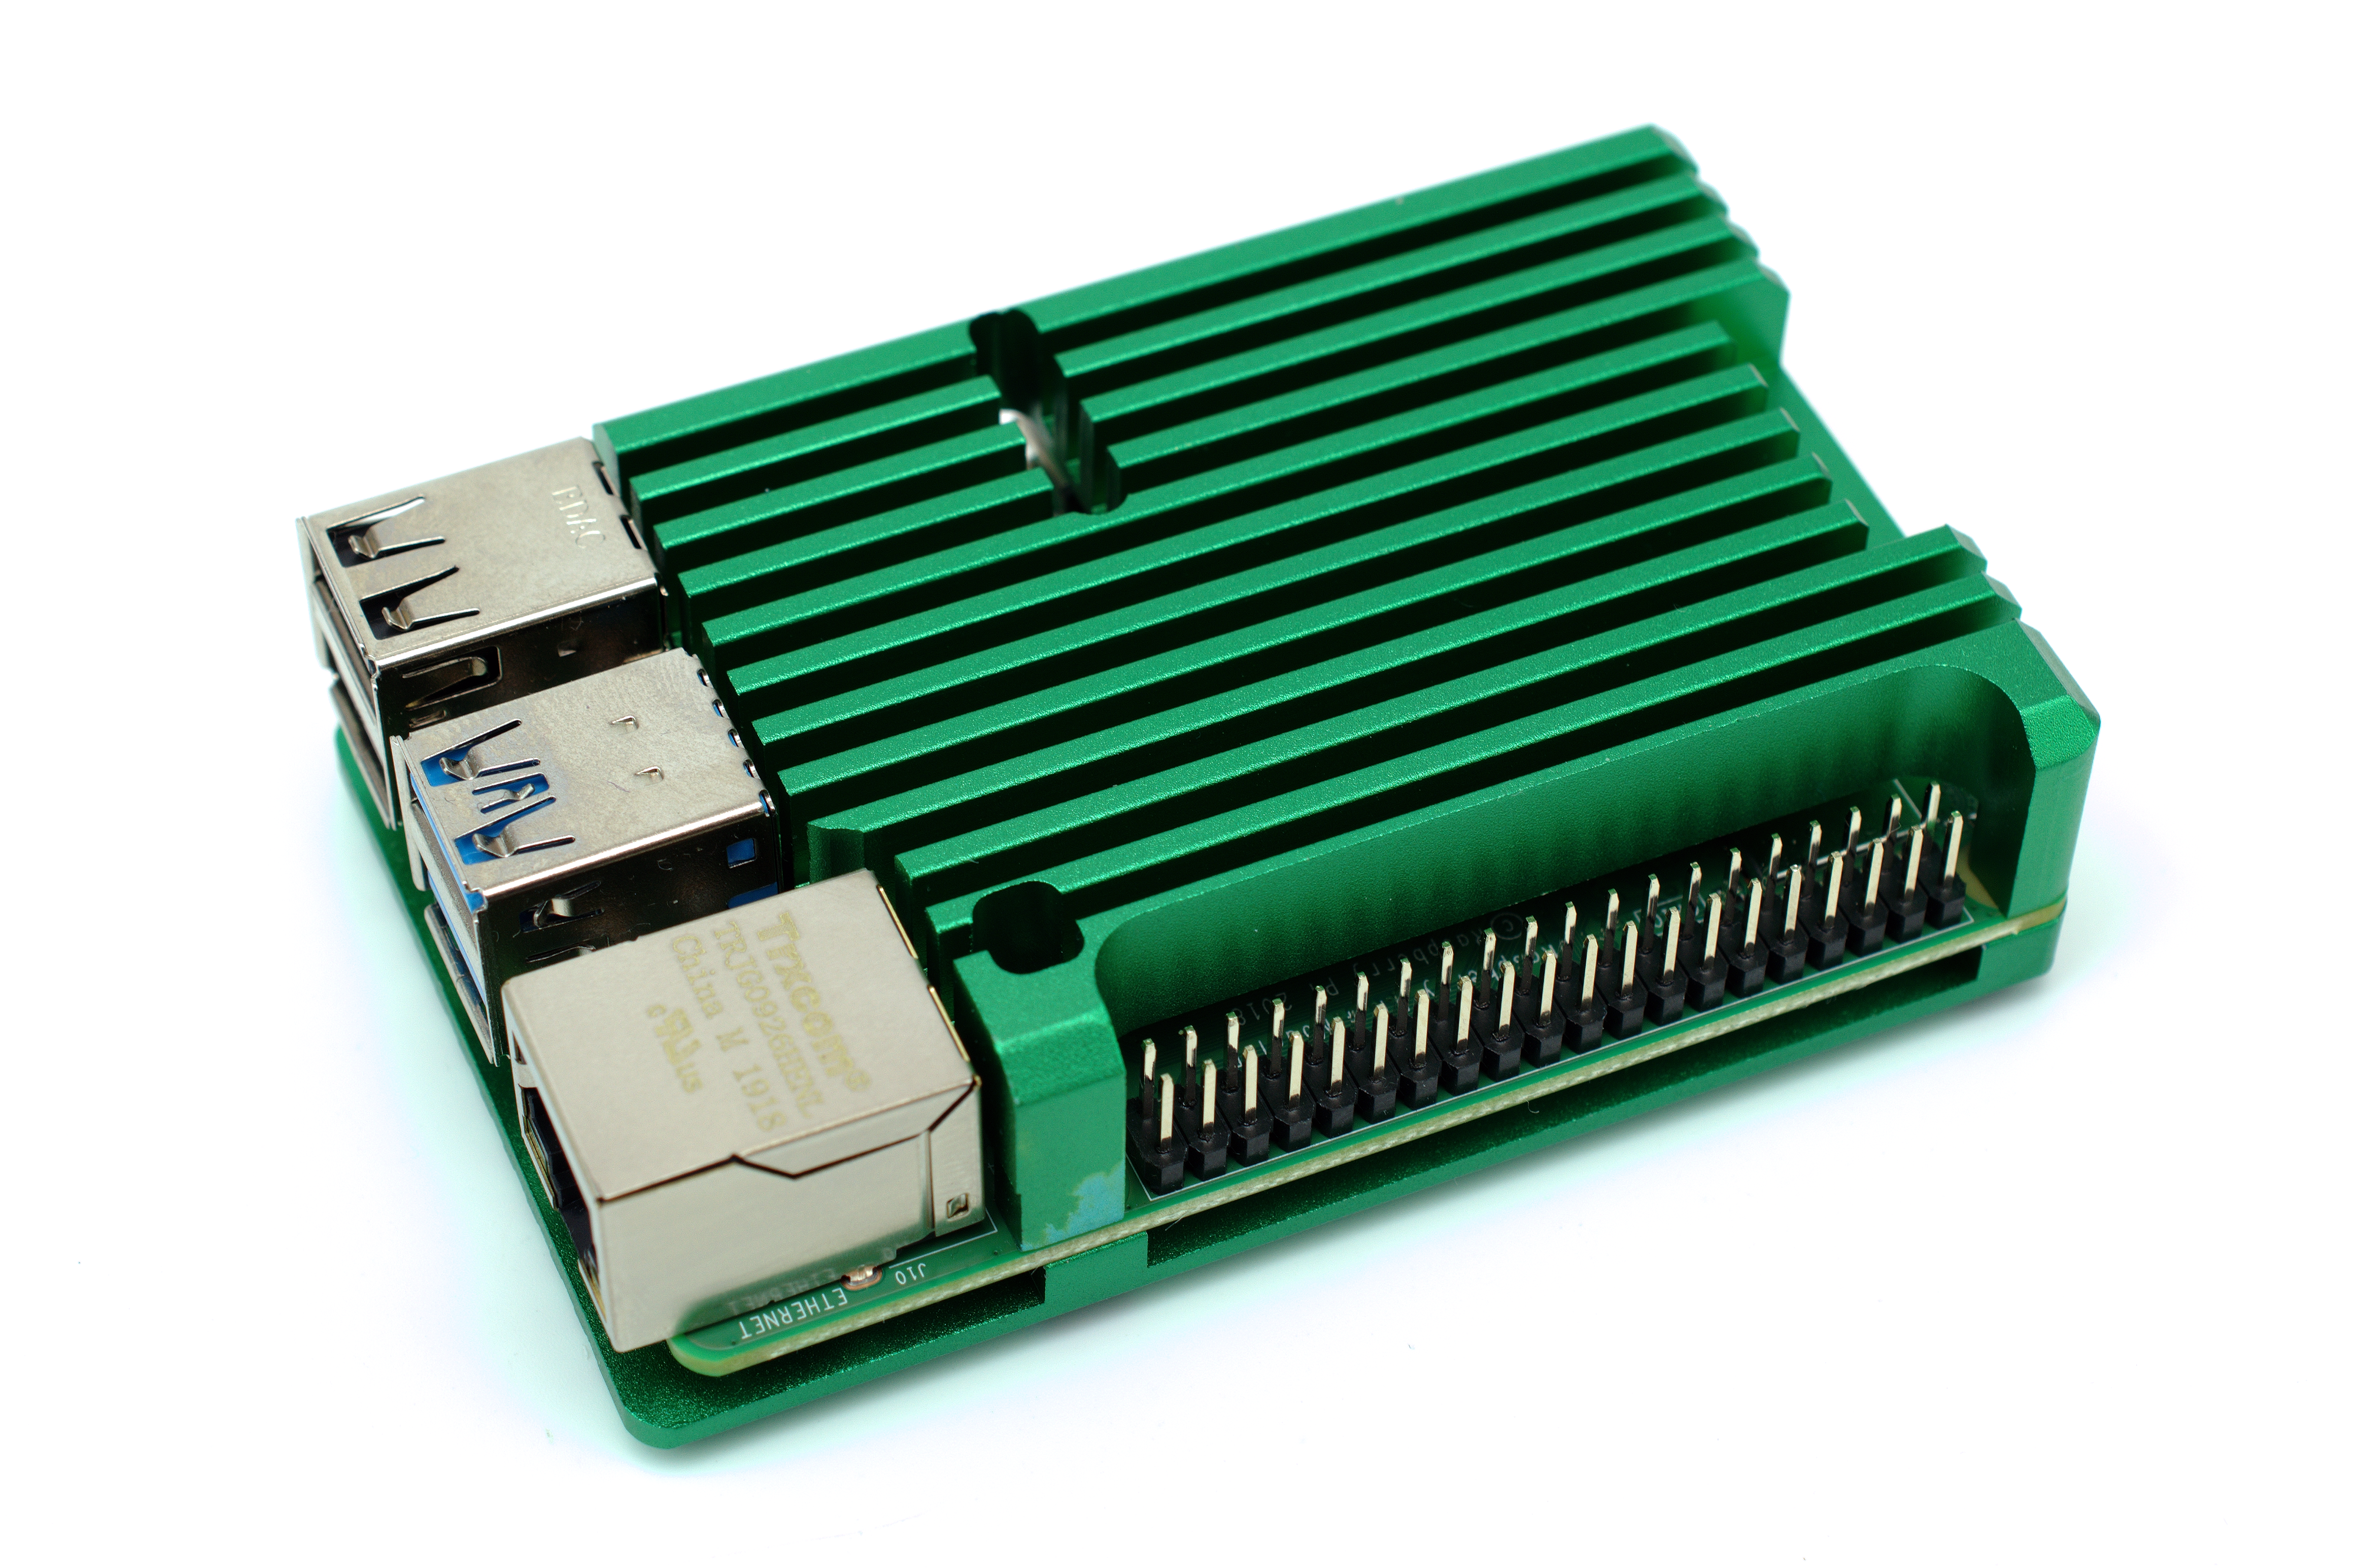 Raspberry Pi 3 B Model Transparent Sliced Acrylic Case Enclosure Box Green